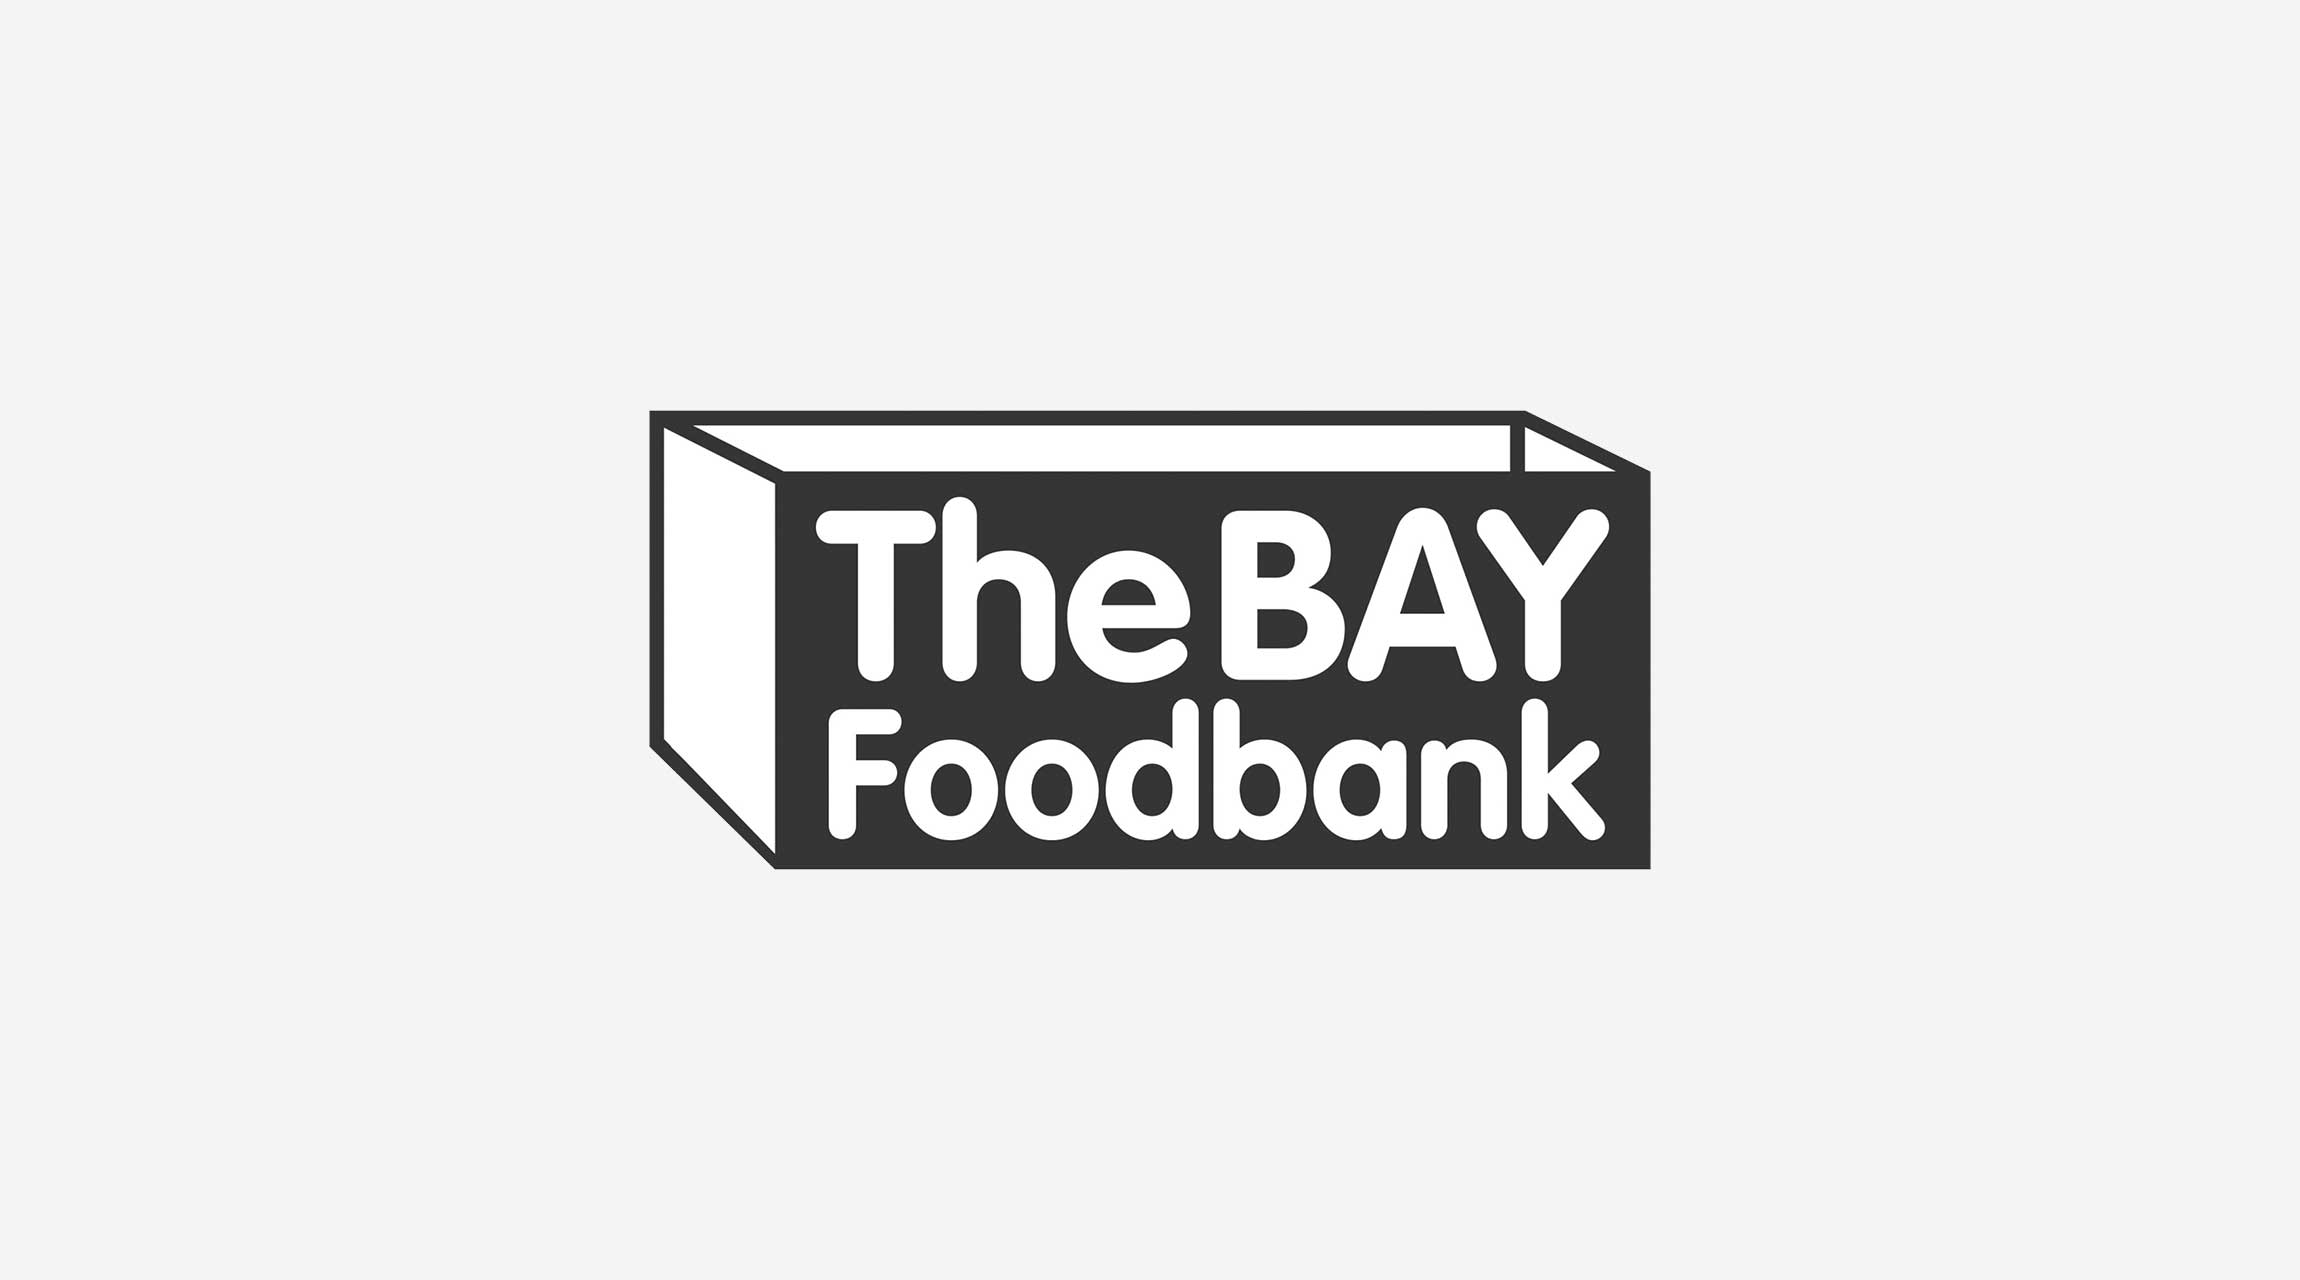 img-devin-news-bay-foodbank